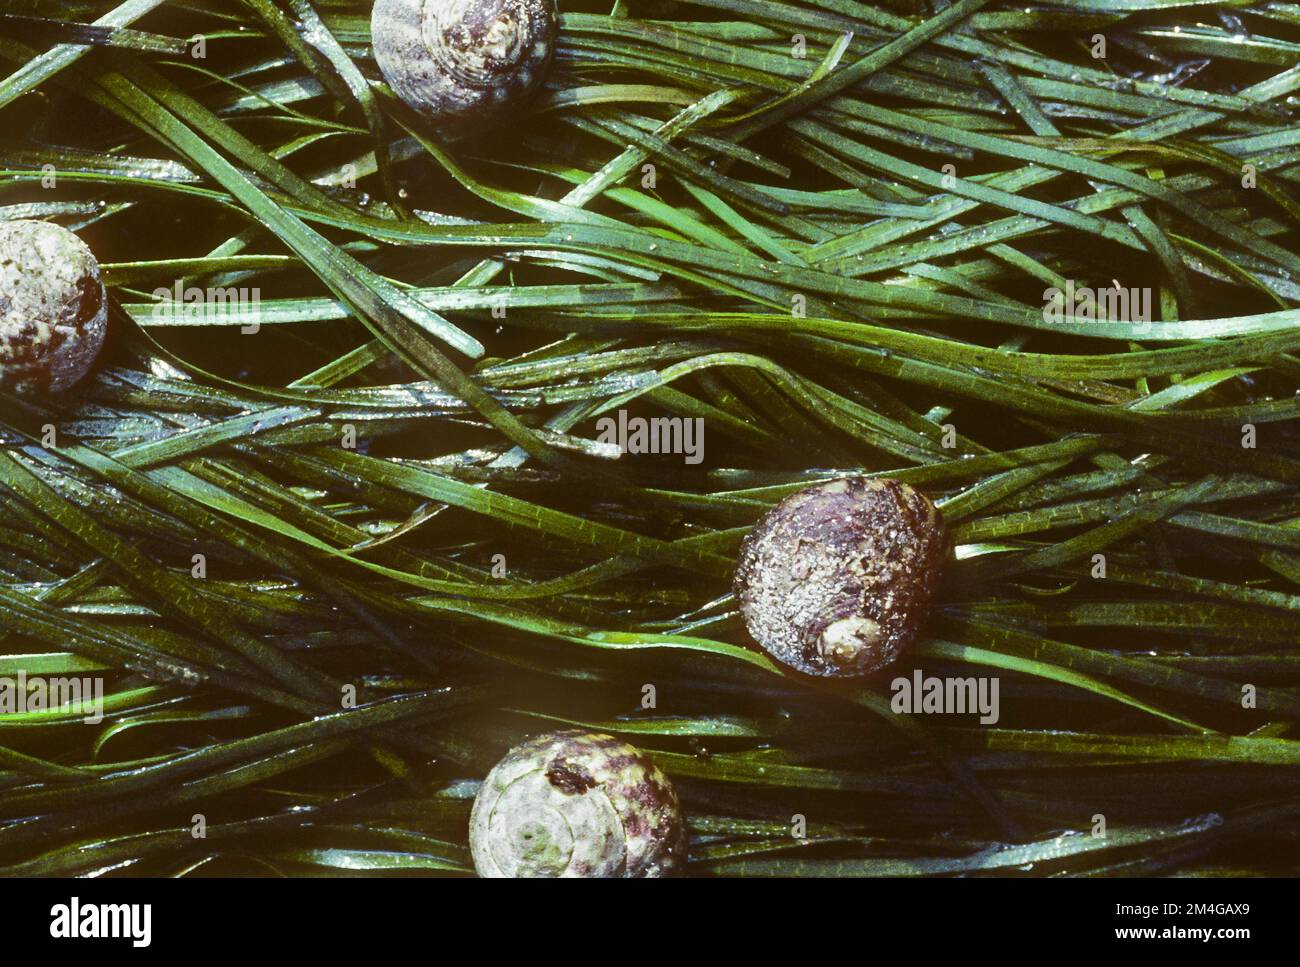 dwarf eelgrass (Zostera noltii, Zostera nana), with snails Stock Photo